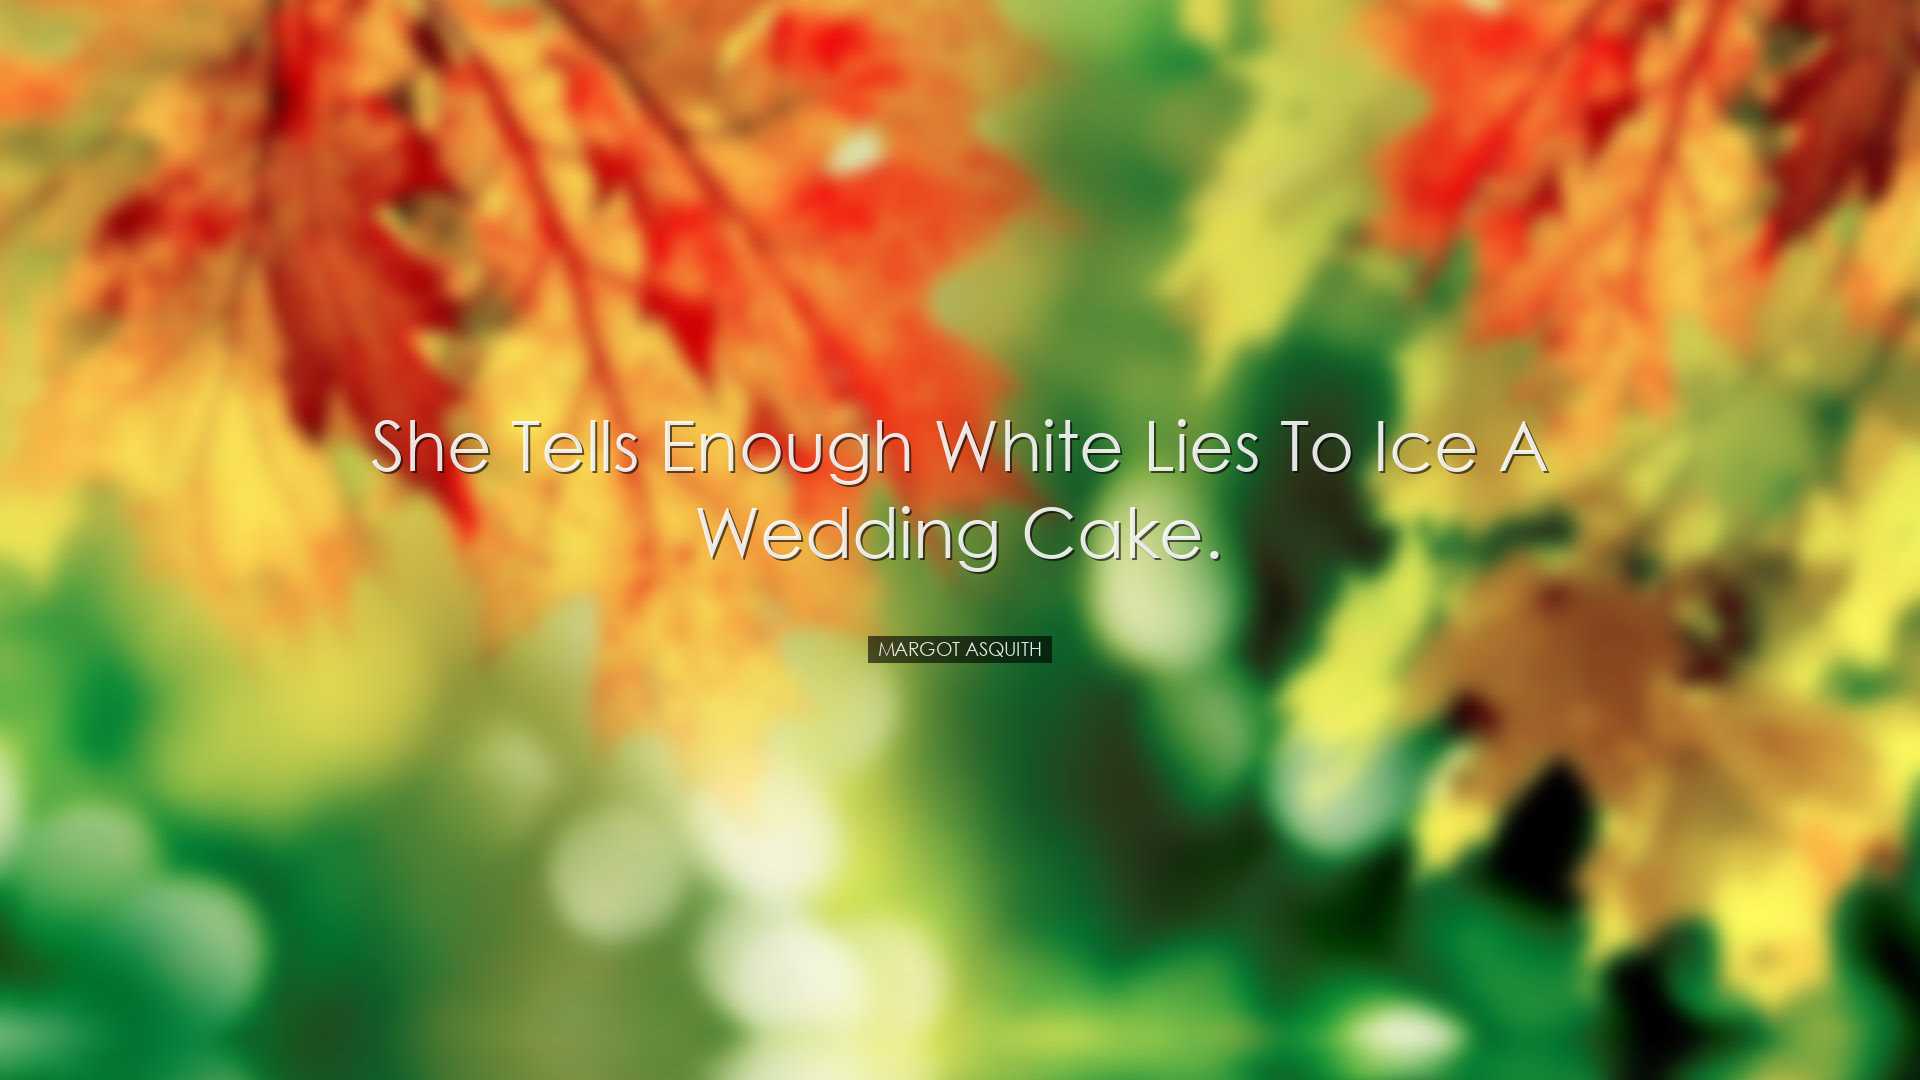 She tells enough white lies to ice a wedding cake. - Margot Asquit